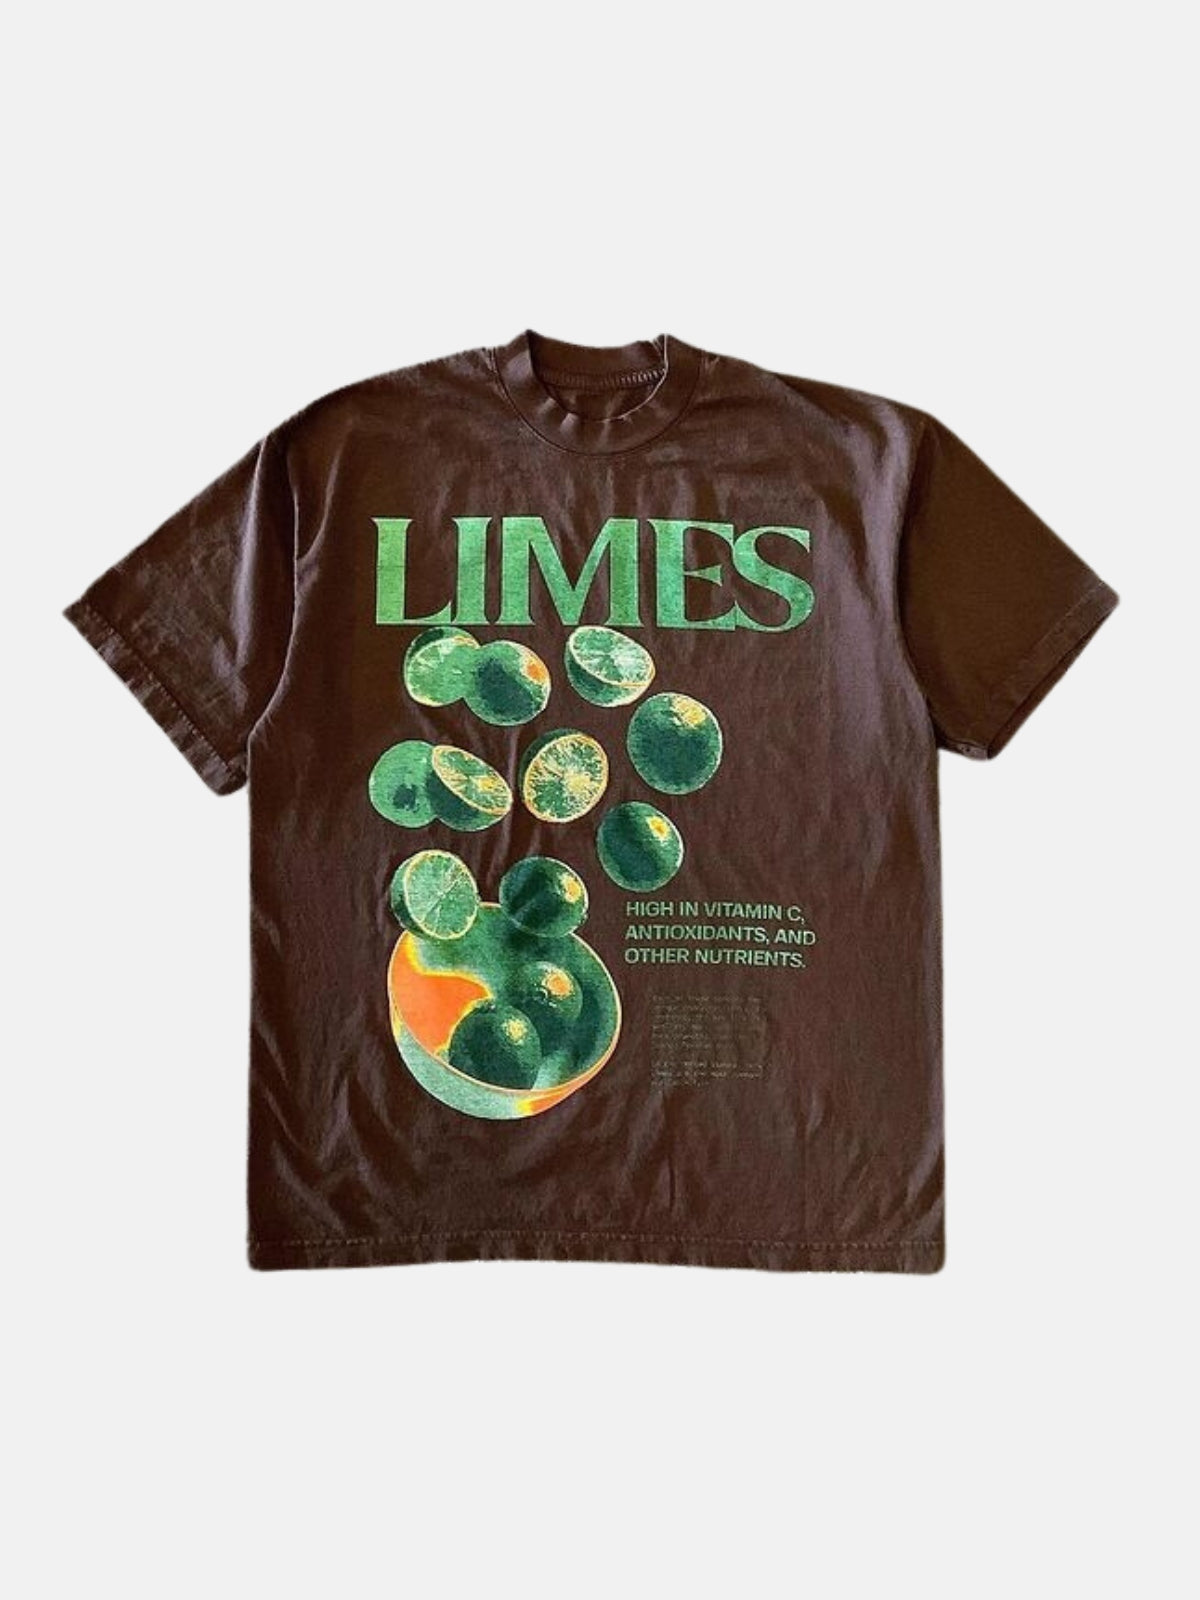 LIMES T-SHIRT